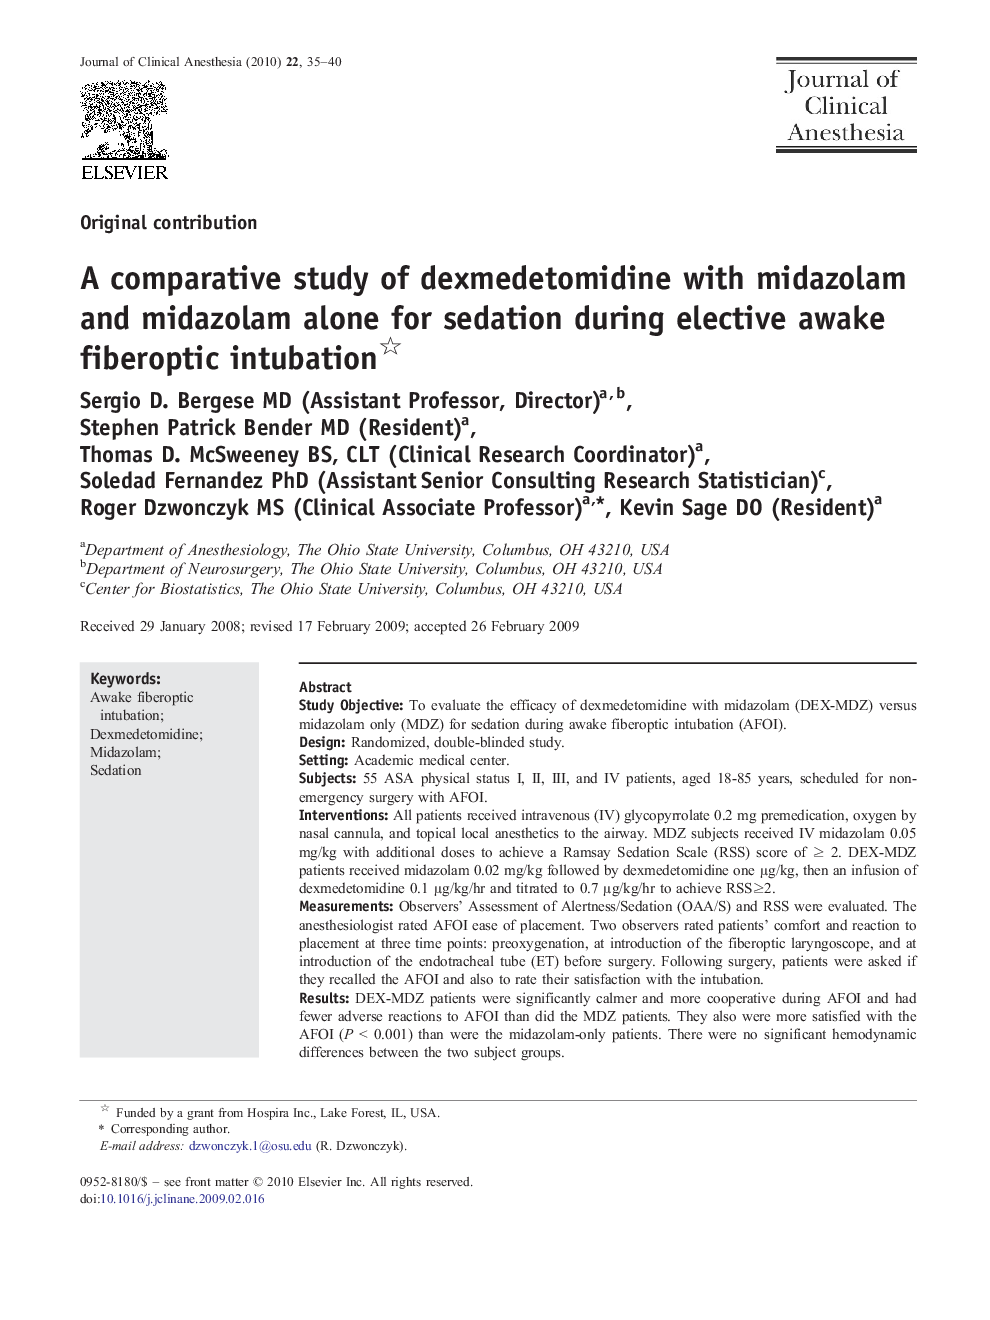 A comparative study of dexmedetomidine with midazolam and midazolam alone for sedation during elective awake fiberoptic intubation 